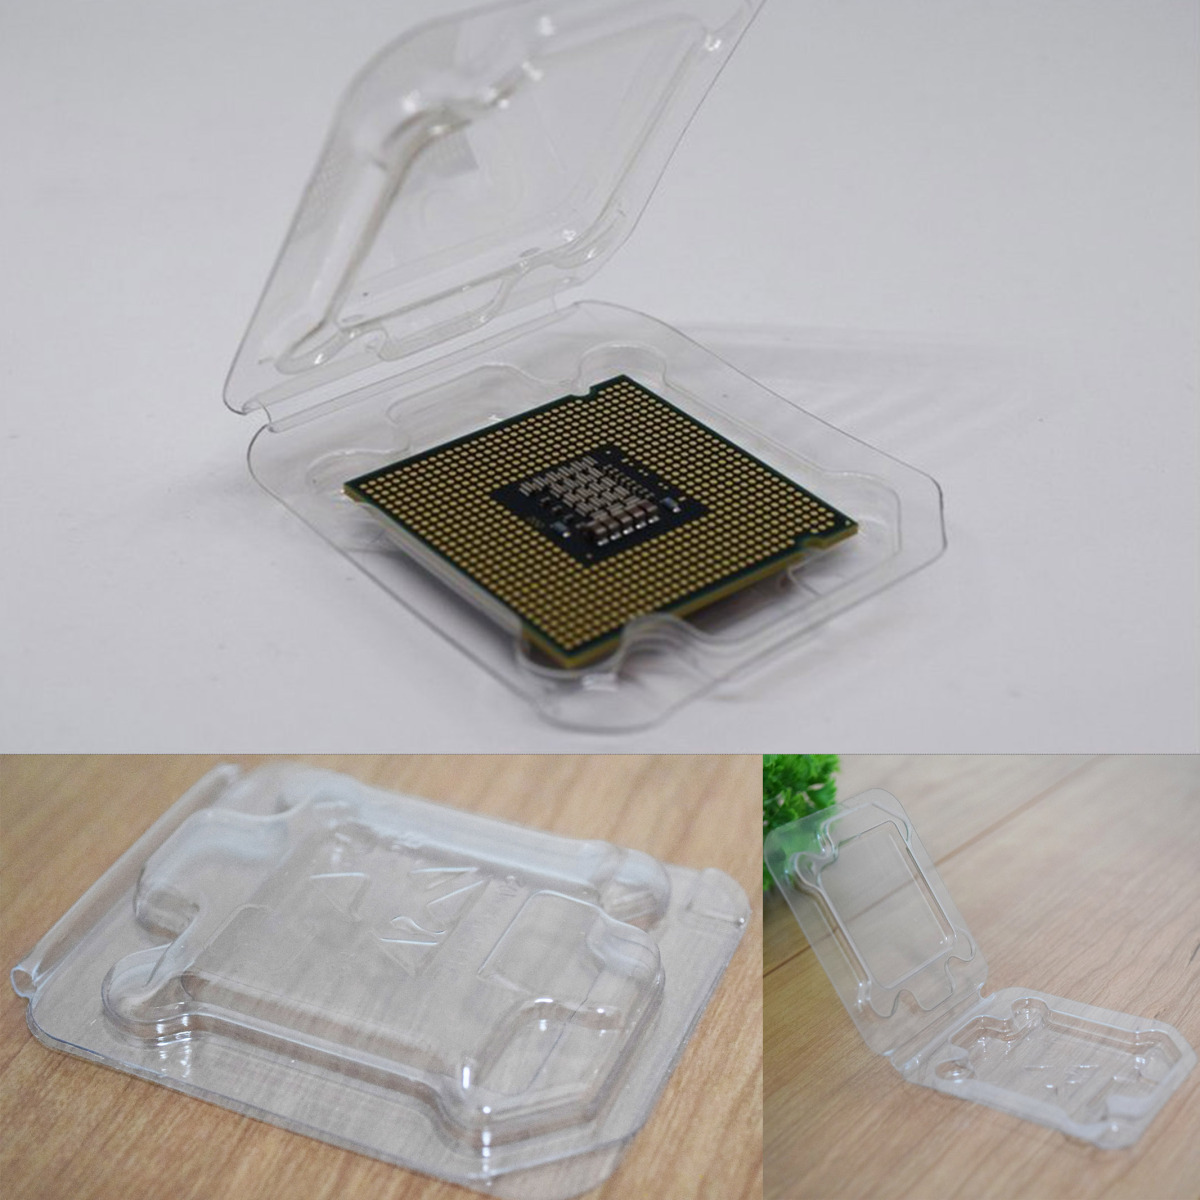 【 LGA1150 】CPU シェルケース LGA 用 プラスチック 保管 収納ケース 20枚セットの画像4